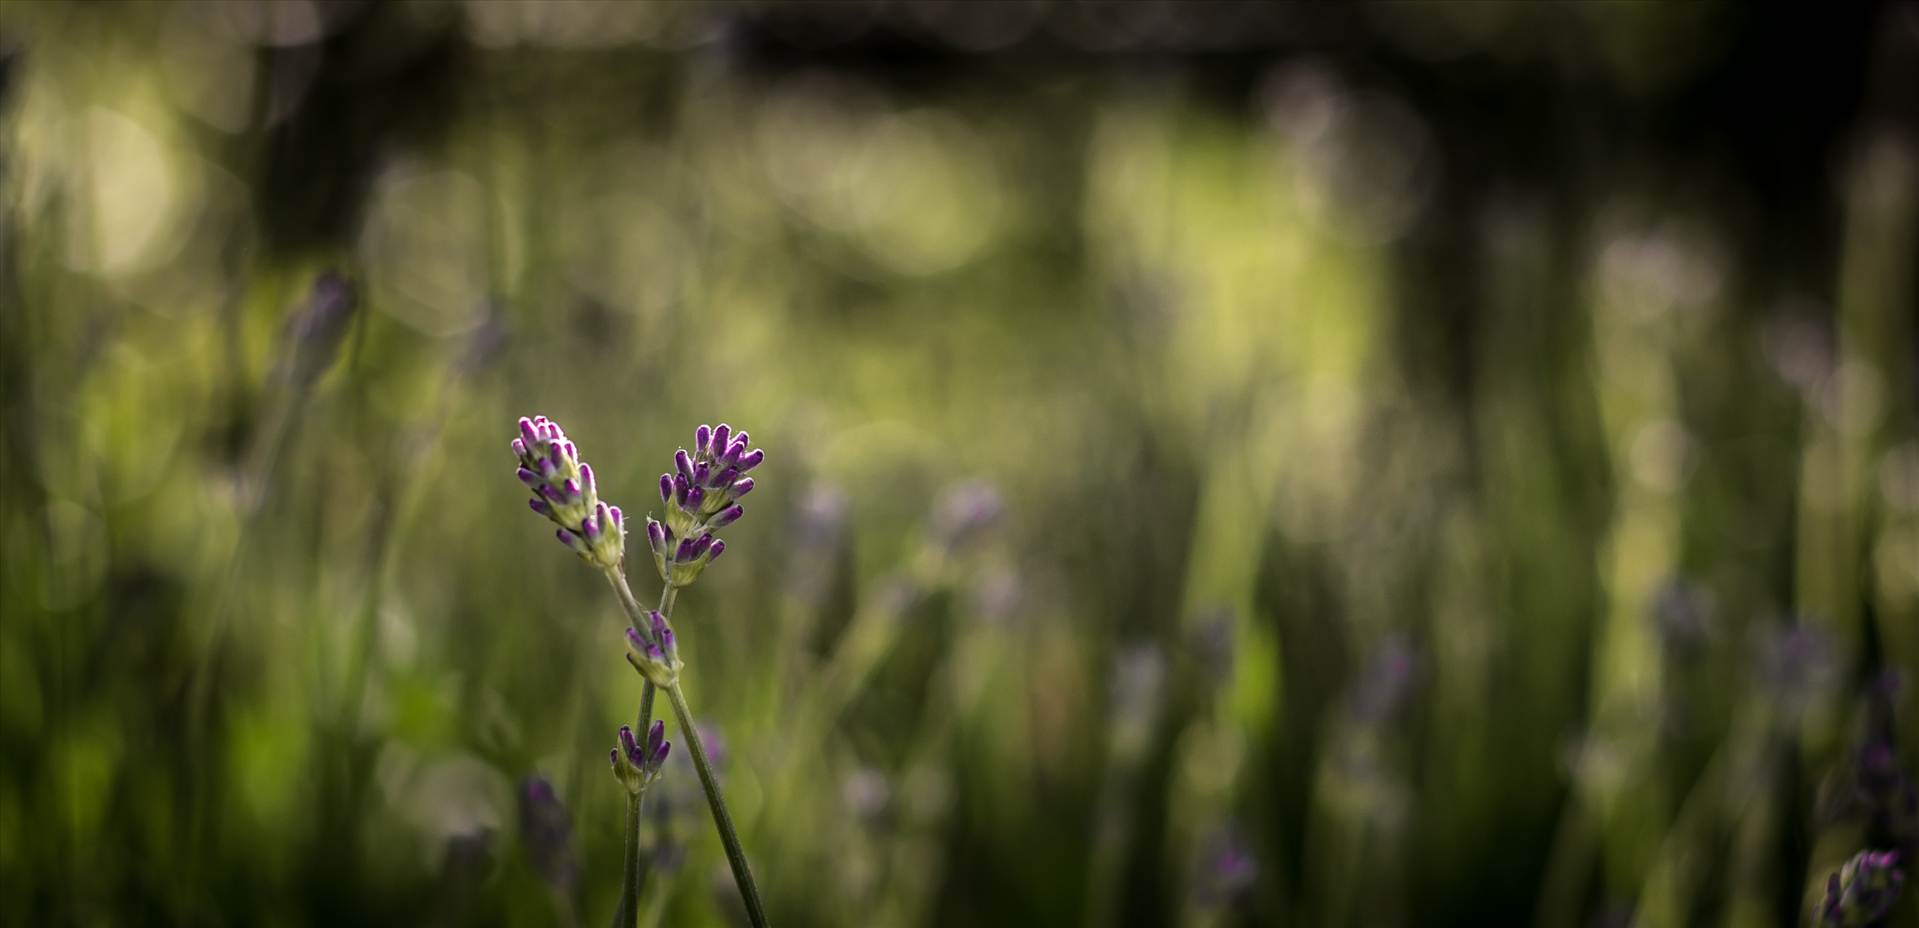 Lavender.jpg  by WPC-187